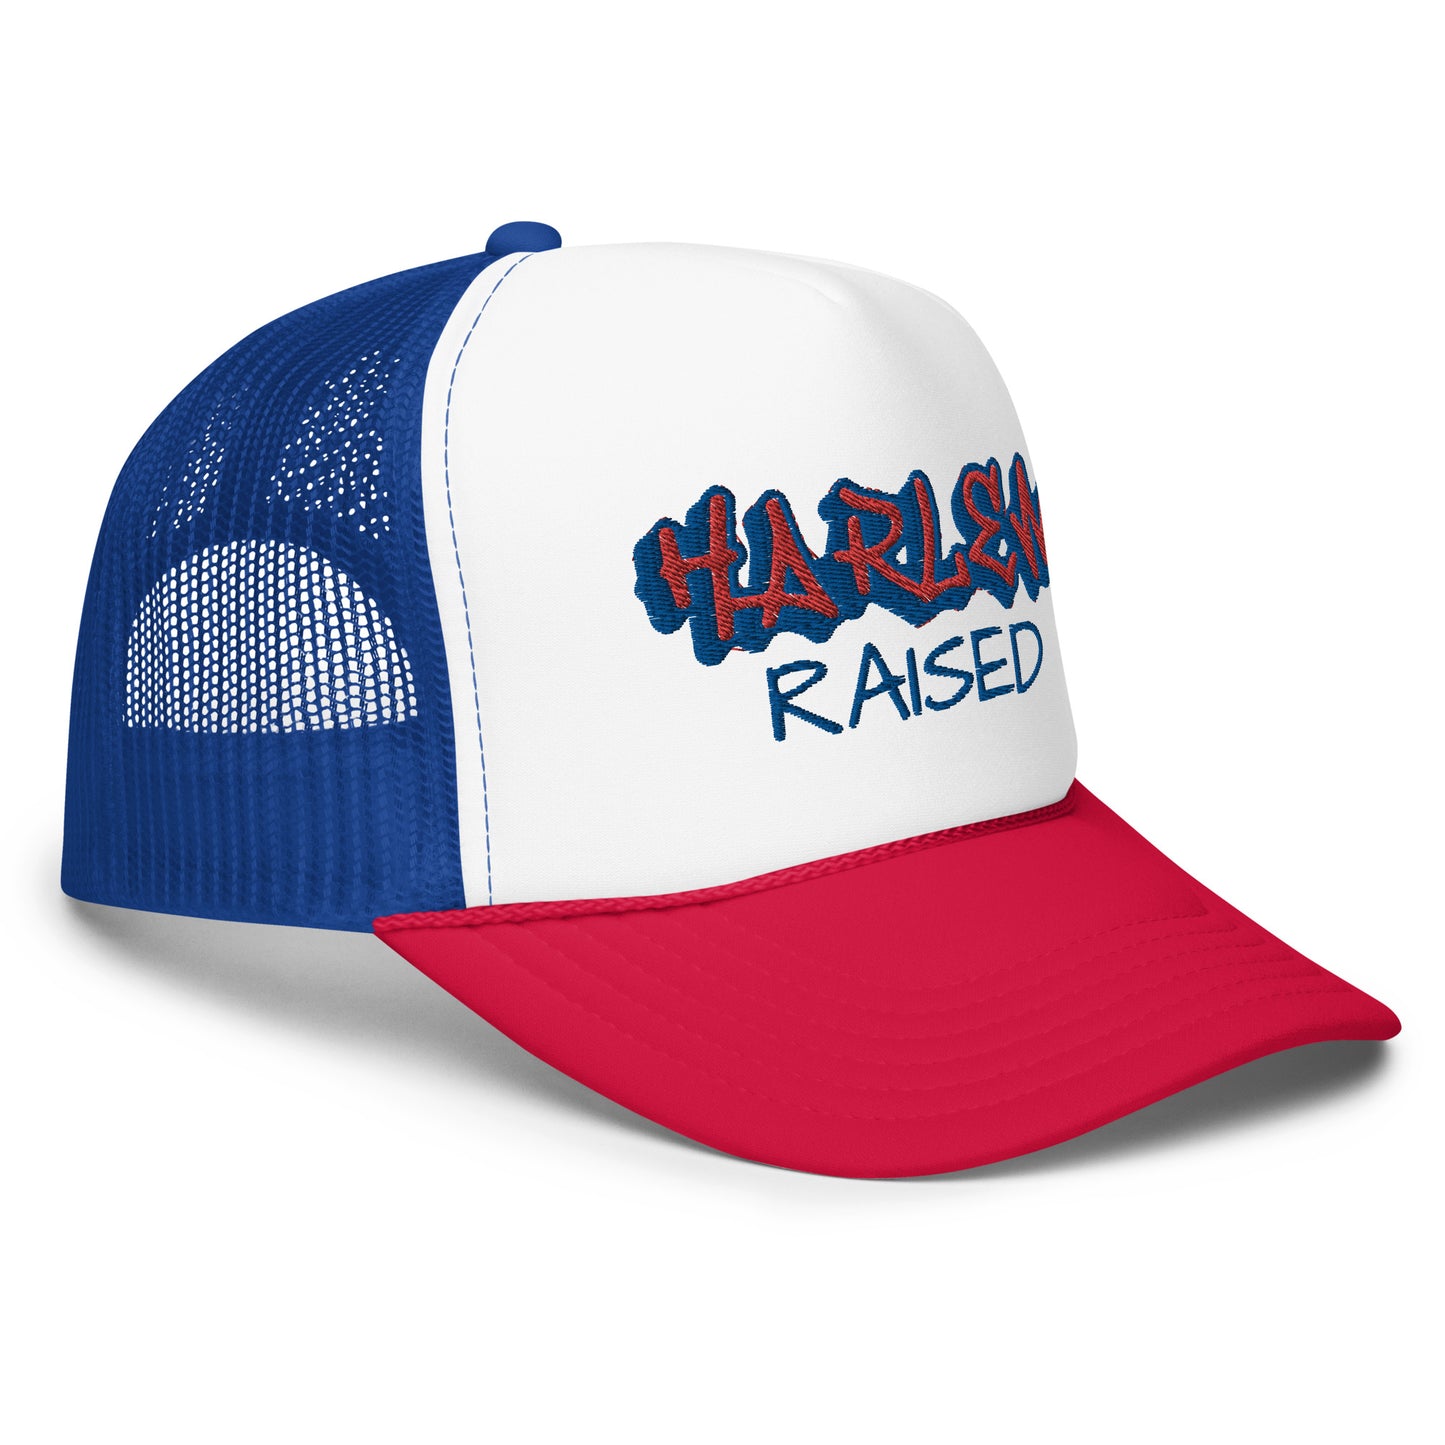 JAZRAE Harlem Raised Stitched  Foam trucker hat